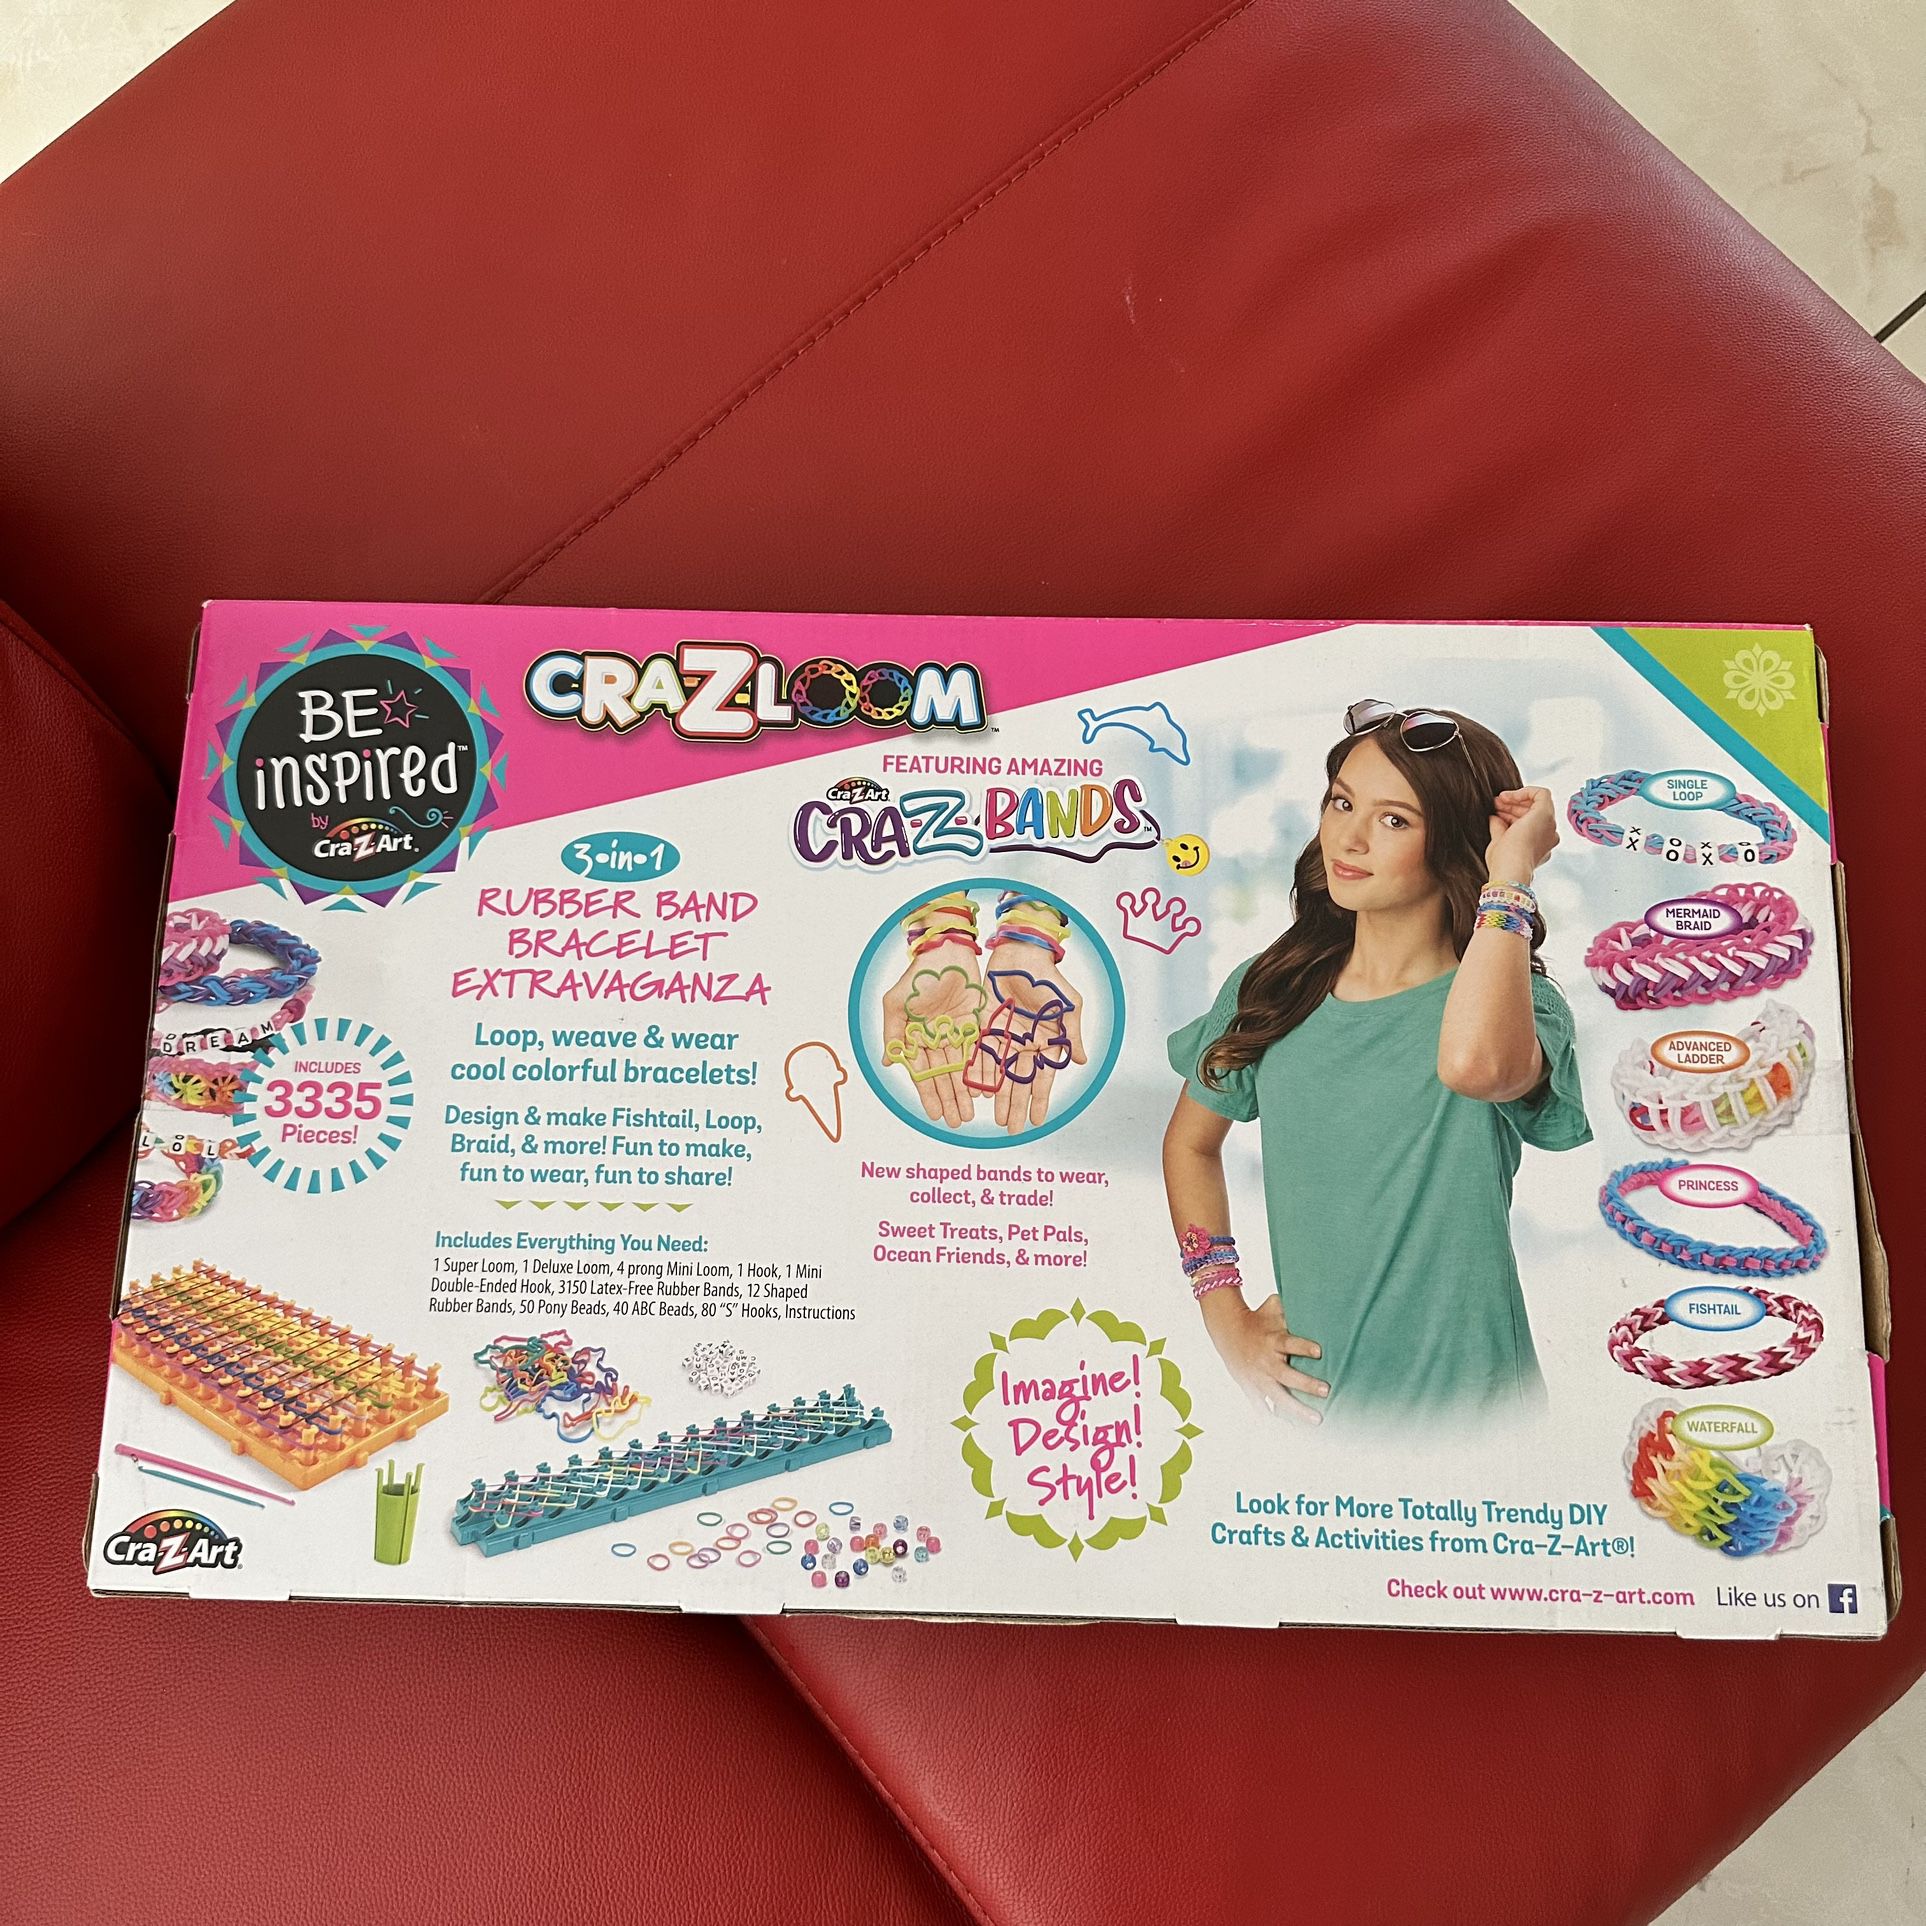 Cra-Z-Art Cra-Z-Loom 3 in 1 Rubber Band Bracelet Extravaganza